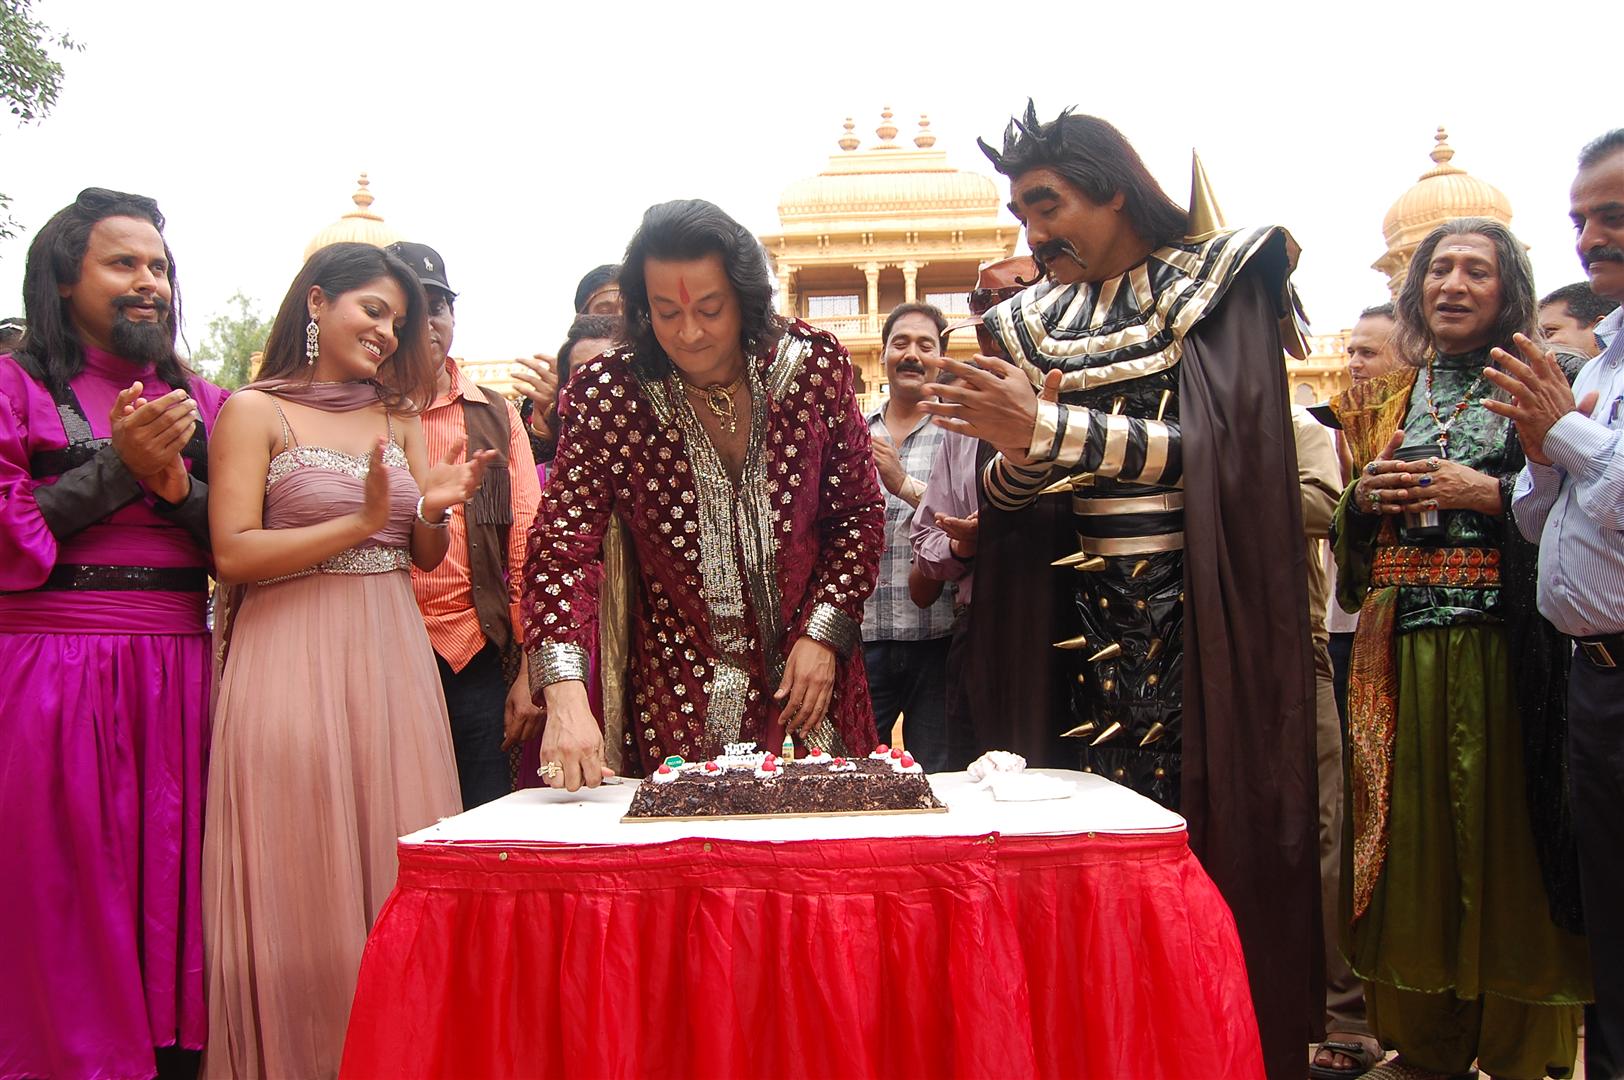 DSC_1089 Shailendra Singh as Kroor Singh invites Santosh Shukla as Virendra Singh to cut the cake